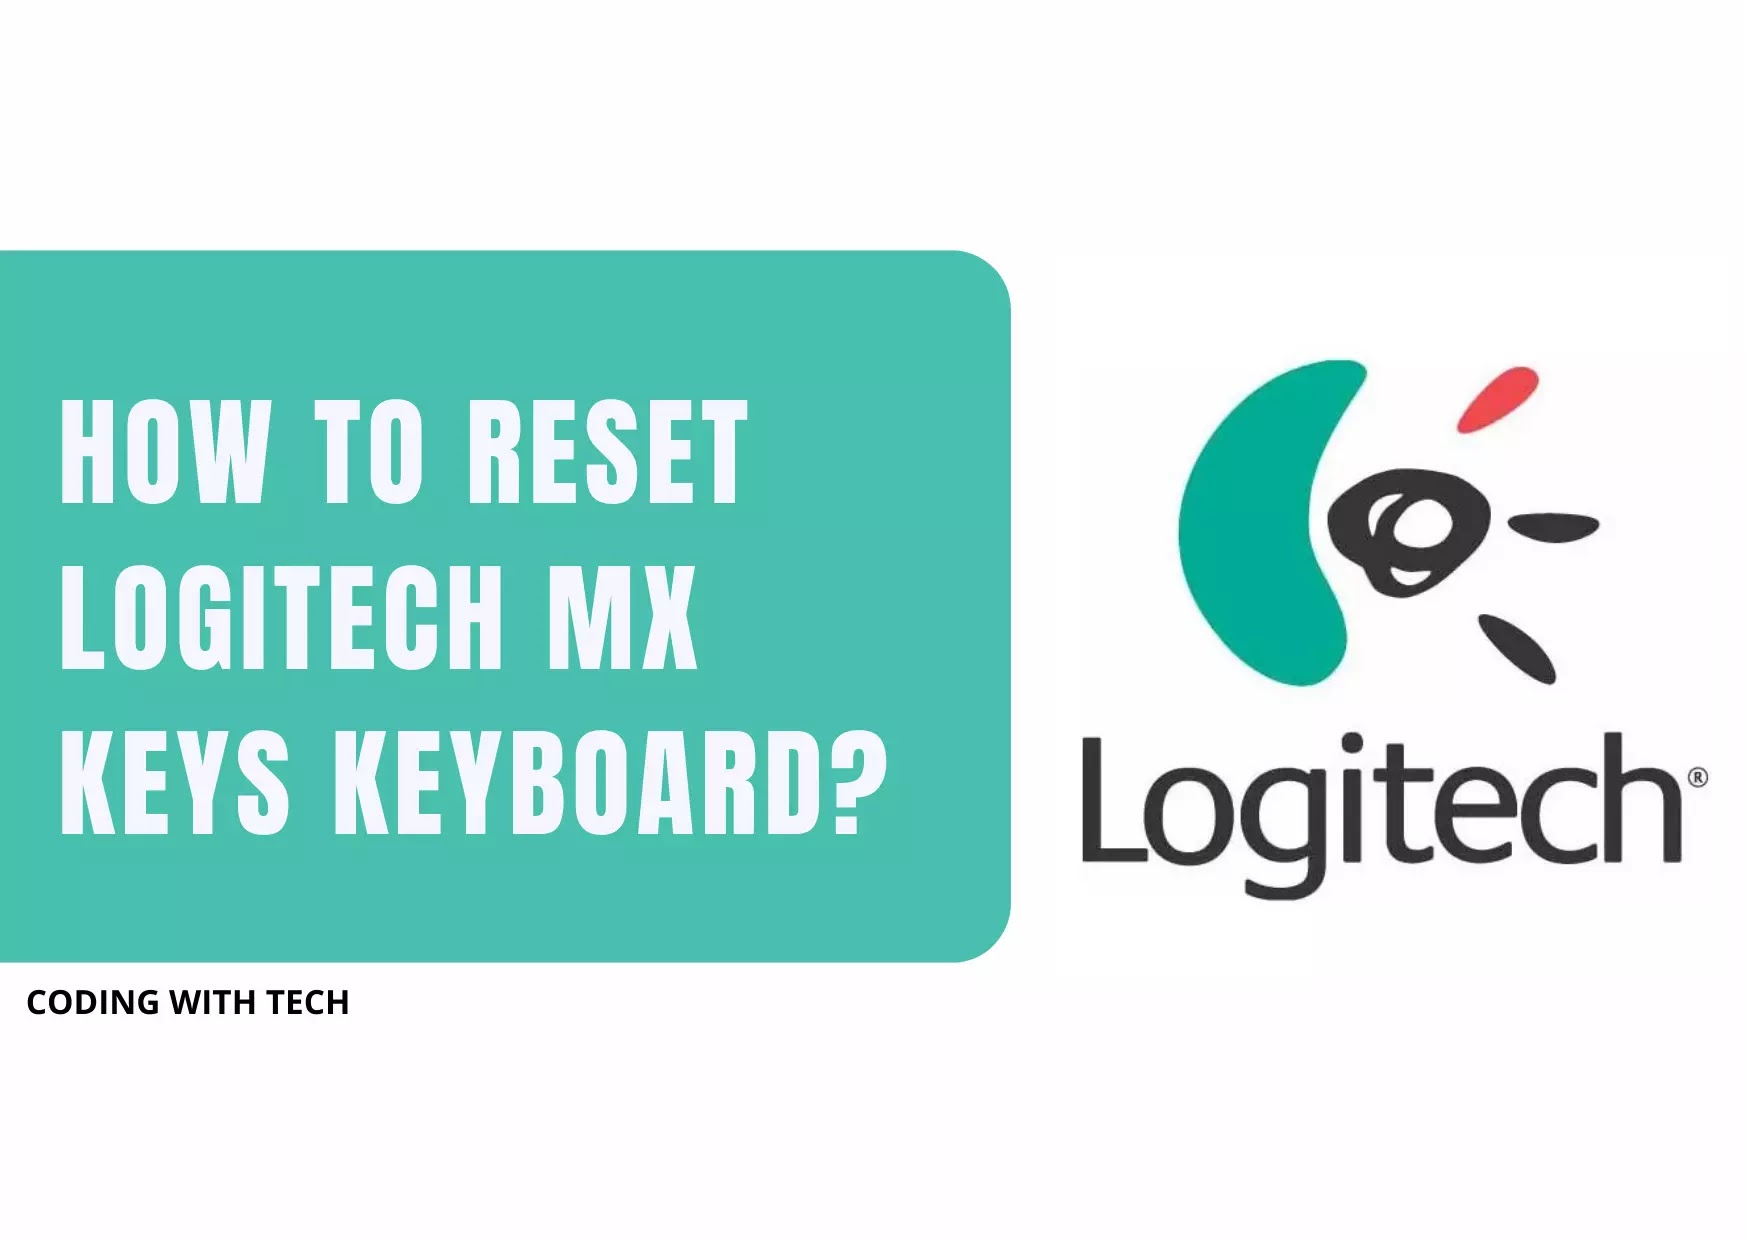 How to reset Logitech MX keys keyboard